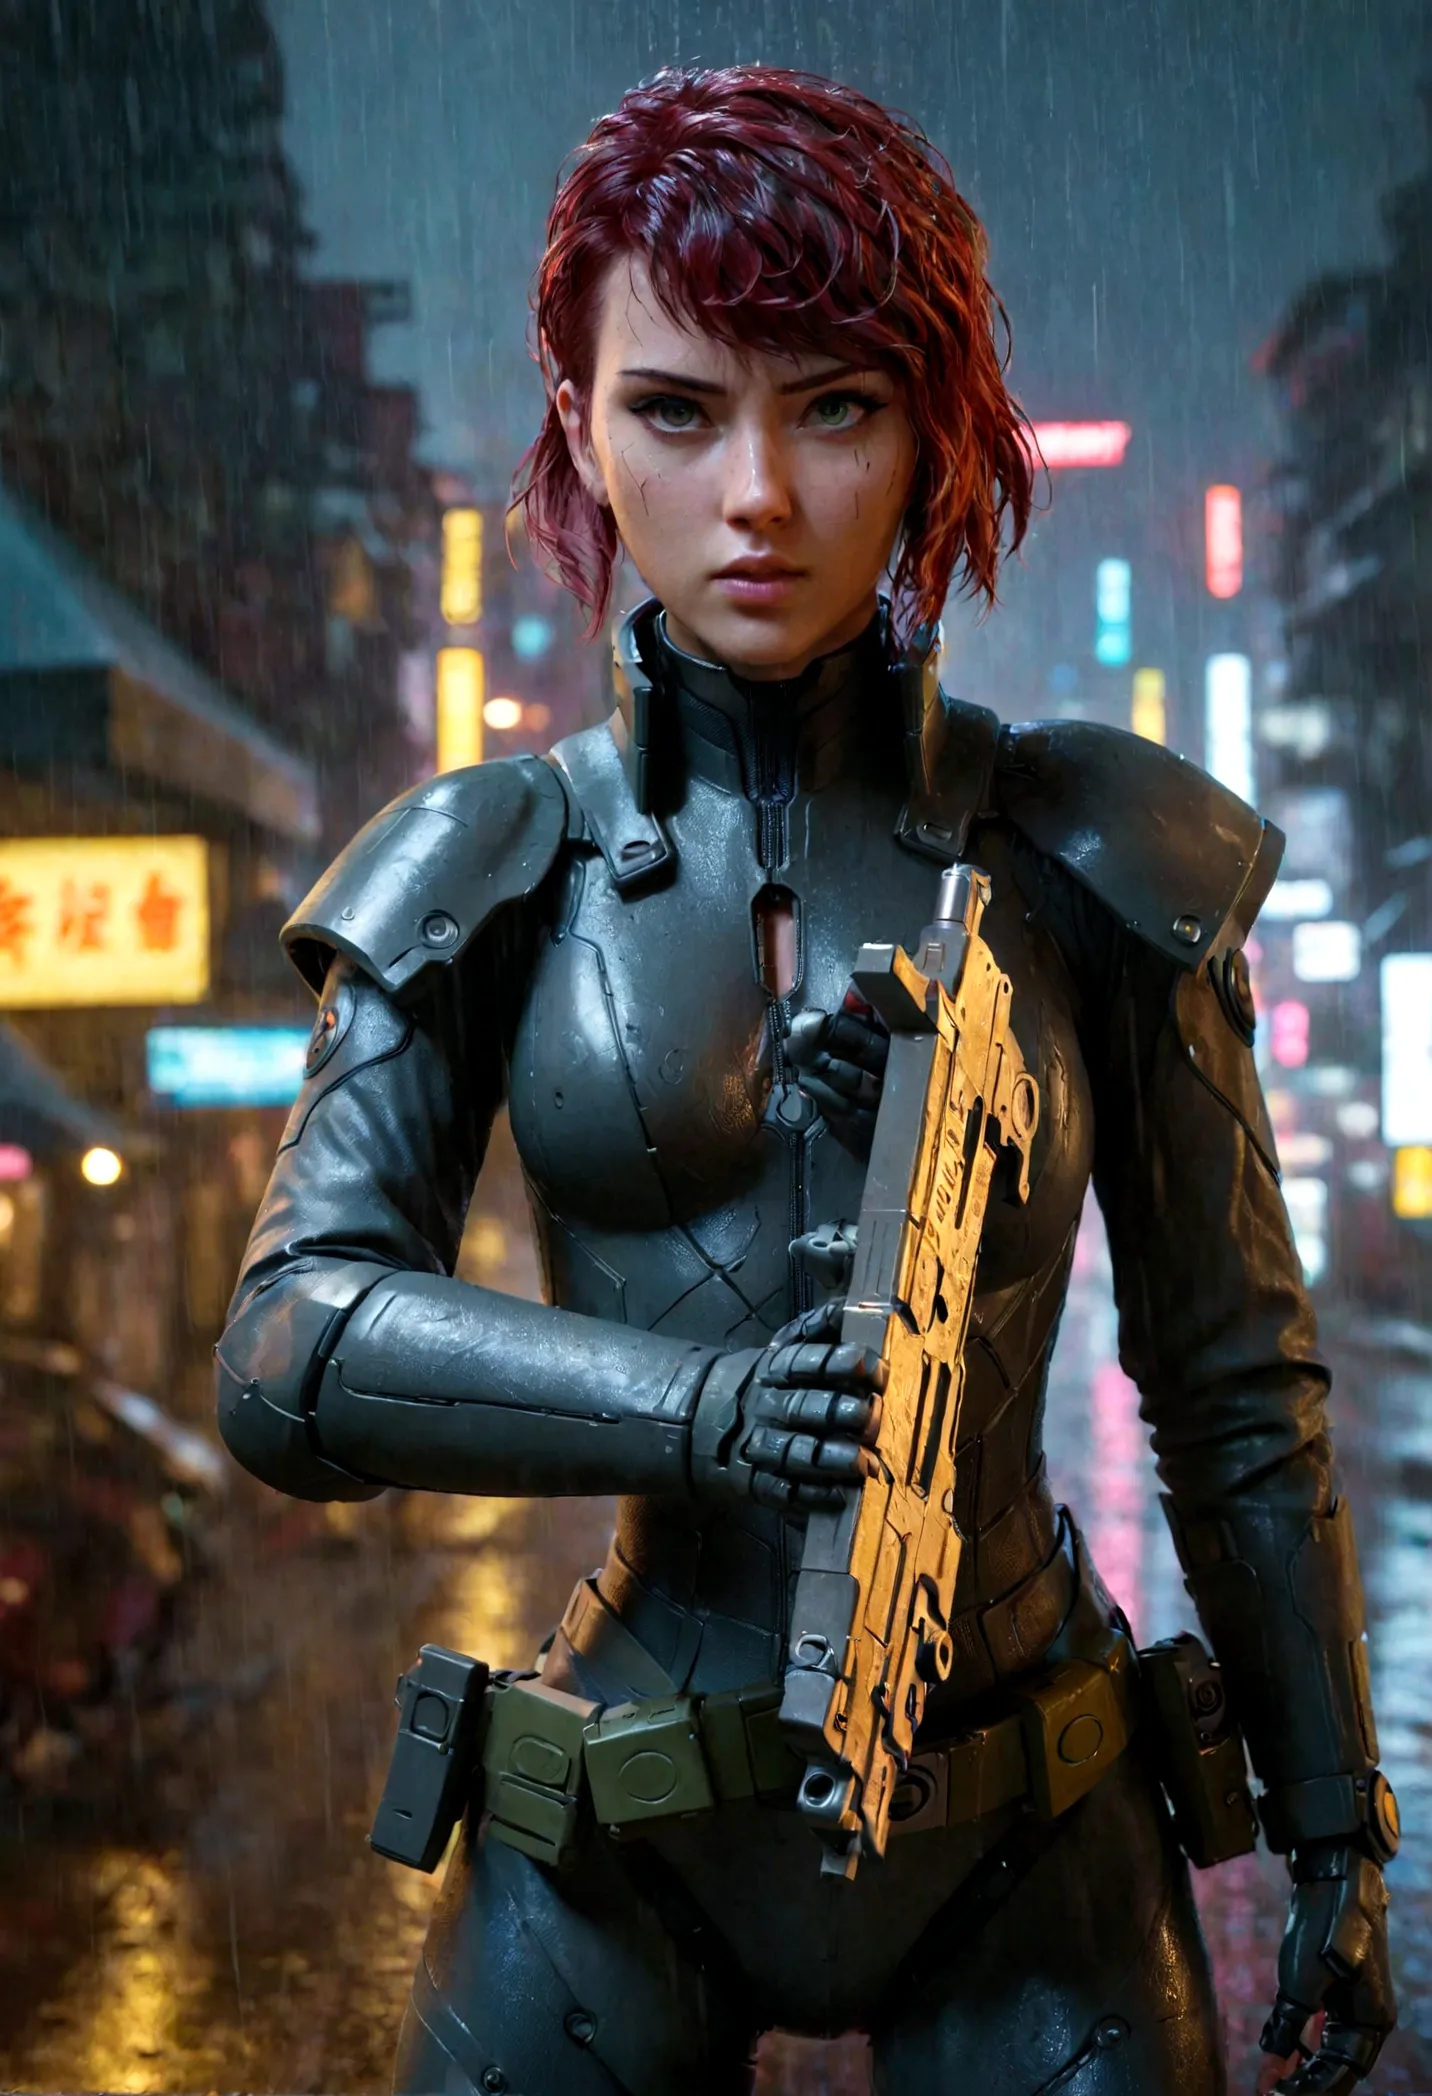 cyberpunk sci-fi character,beautiful young woman wielding a boltgun,ghost in the shell, kusanagi motoko,motion blur,rainy night,...